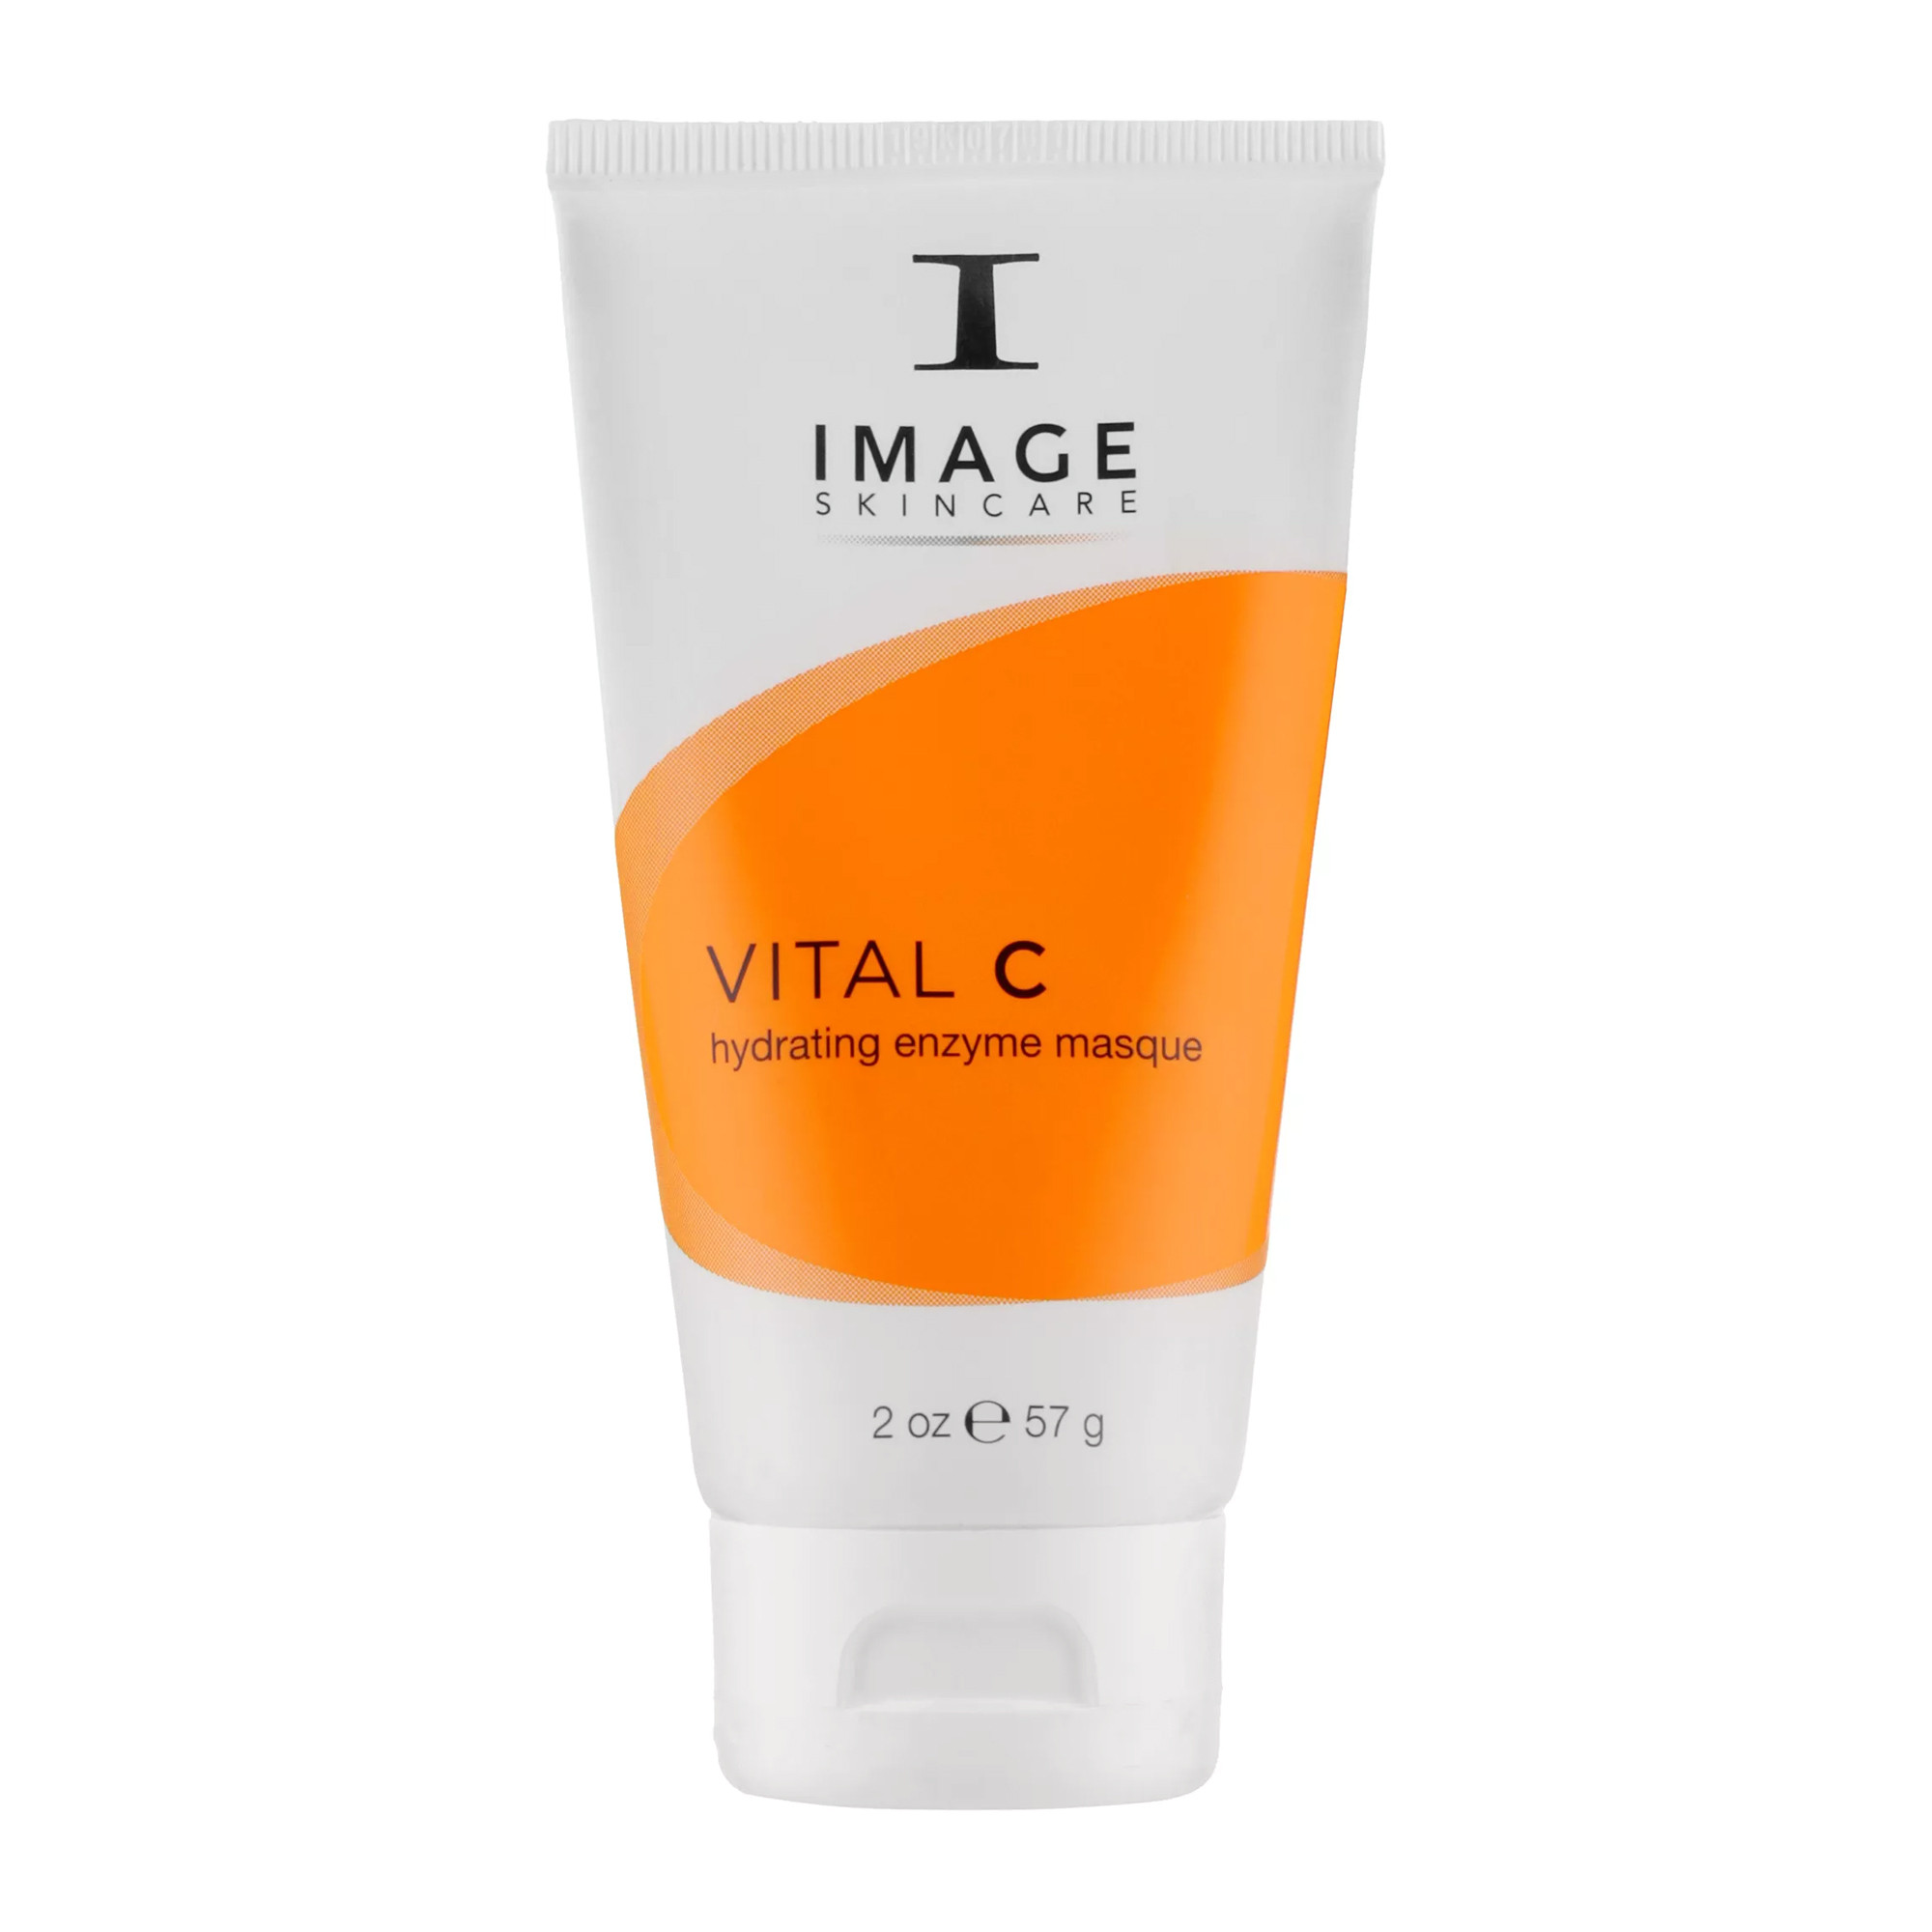 Відгуки про Image Skincare Vital C Hydrating Enzyme Masque Энзимная маска